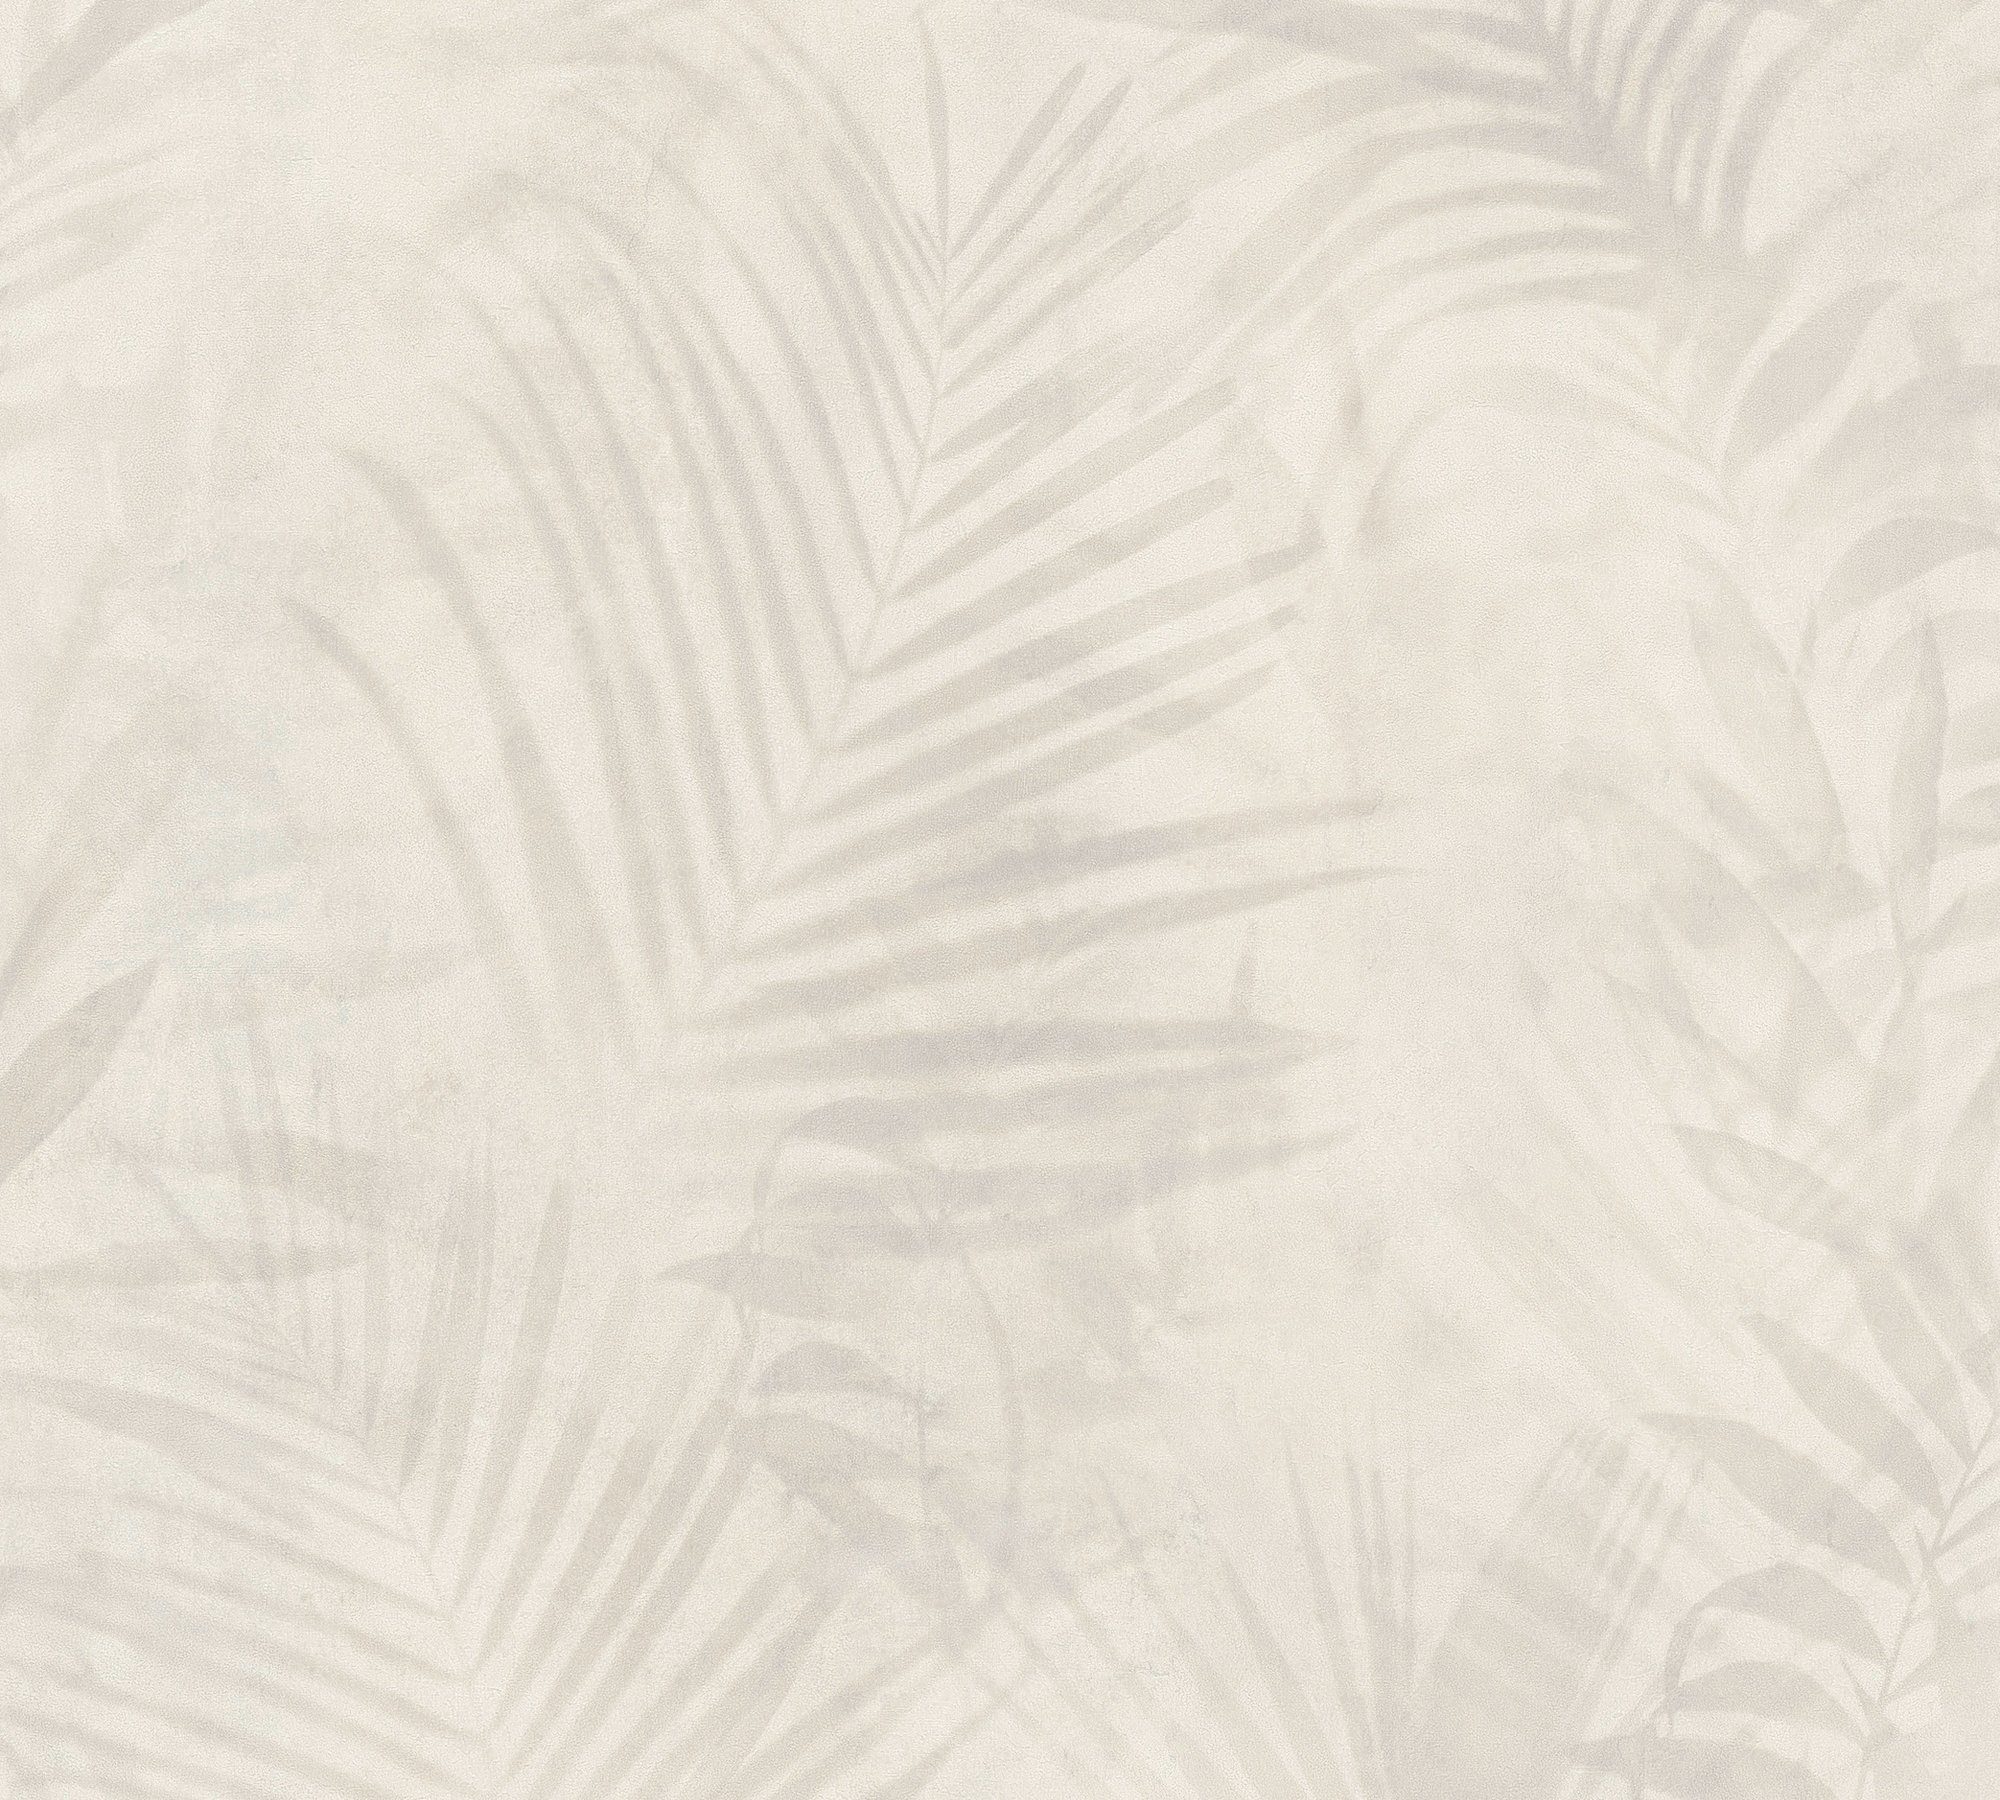 Palmen Dschungeltapete braun Création 2.0 mit Palmenblättern, A.S. Bude Tapete Vliestapete Neue floral, Tropical Concret